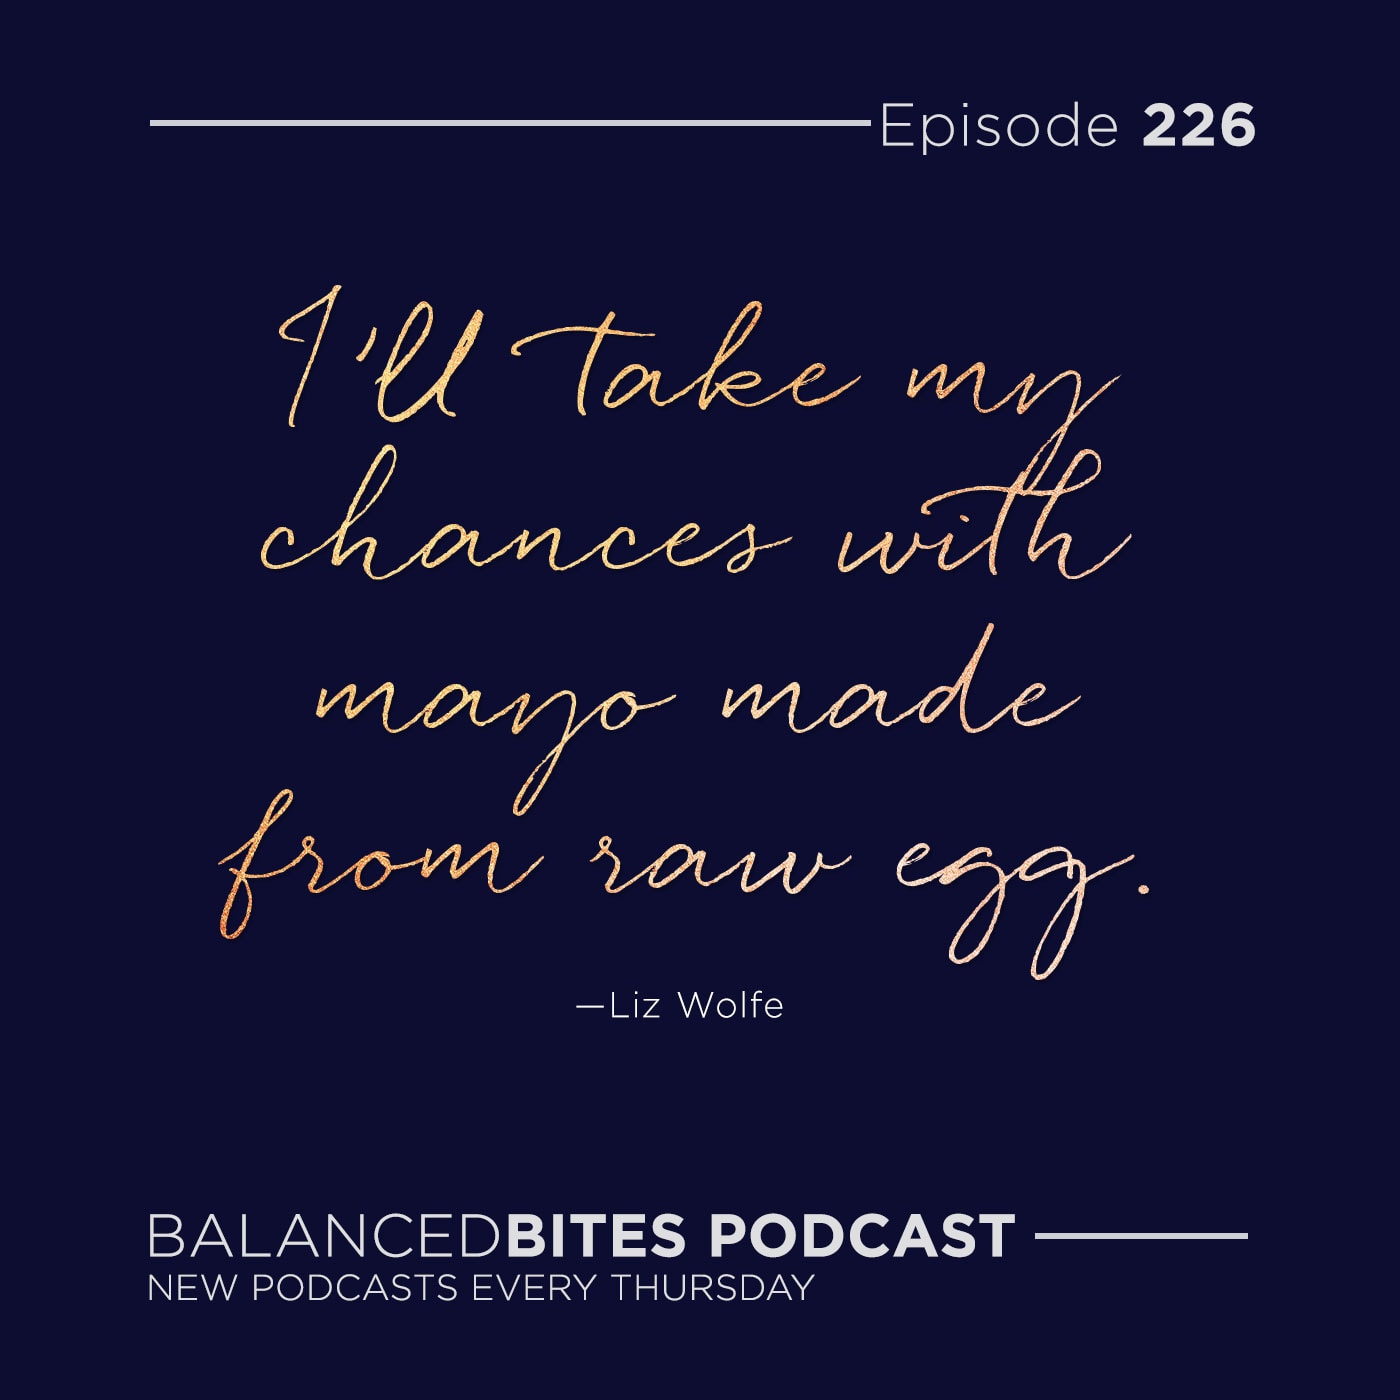 New to Paleo Q&A, Tips & Tricks (Part 2) - Diane Sanfilippo, Liz Wolfe | Balanced Bites